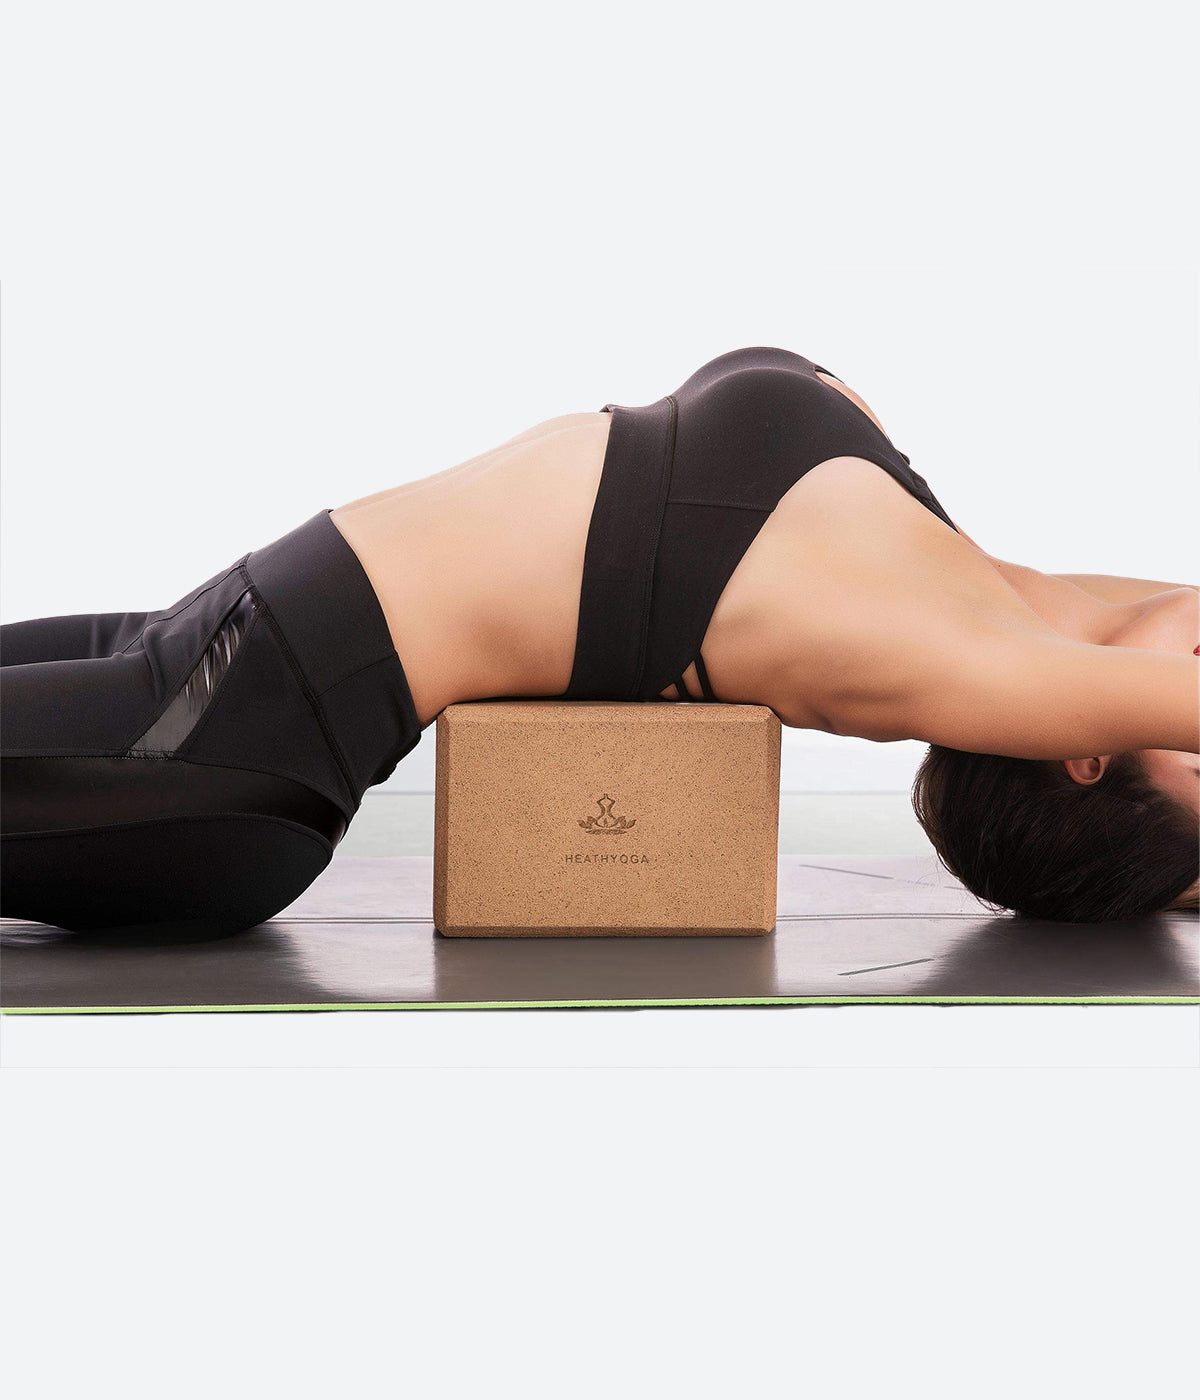 Muka Yoga Blocks 2 Pack with Strap Set, Black Yoga Block EVA Foam Brick &  Stretching Strap for Workout Sale, Reviews. - Opentip